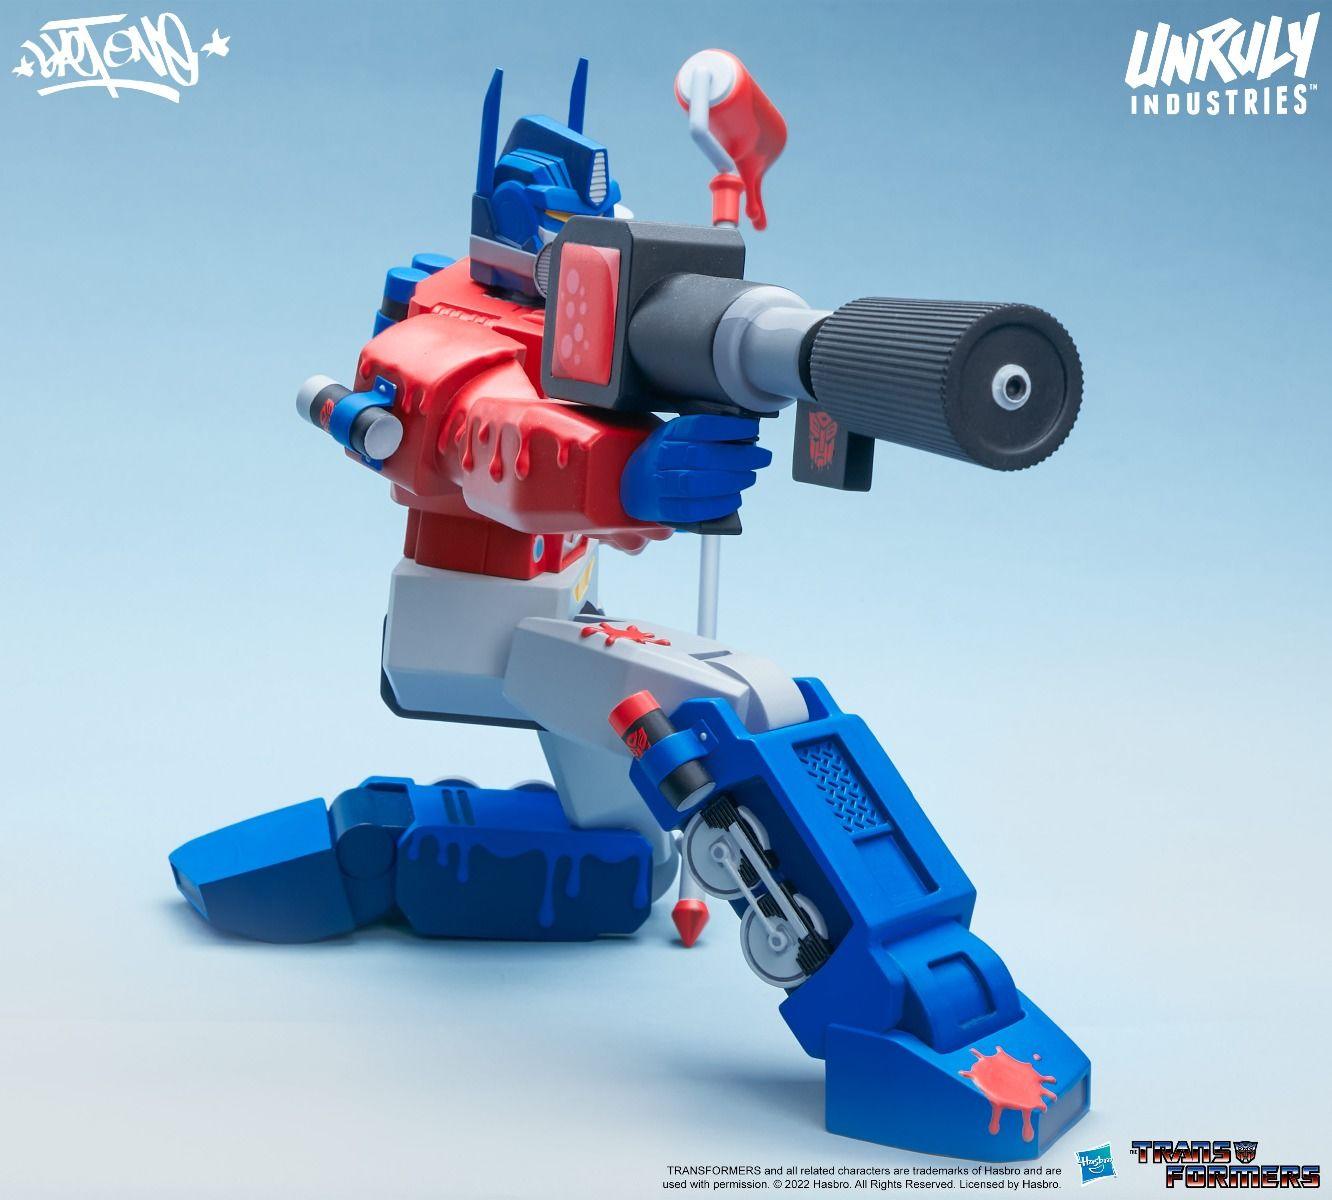 UNR700209 Transformers (TV) - Optimus Prime Designer Statue - Unruly Industries - Titan Pop Culture